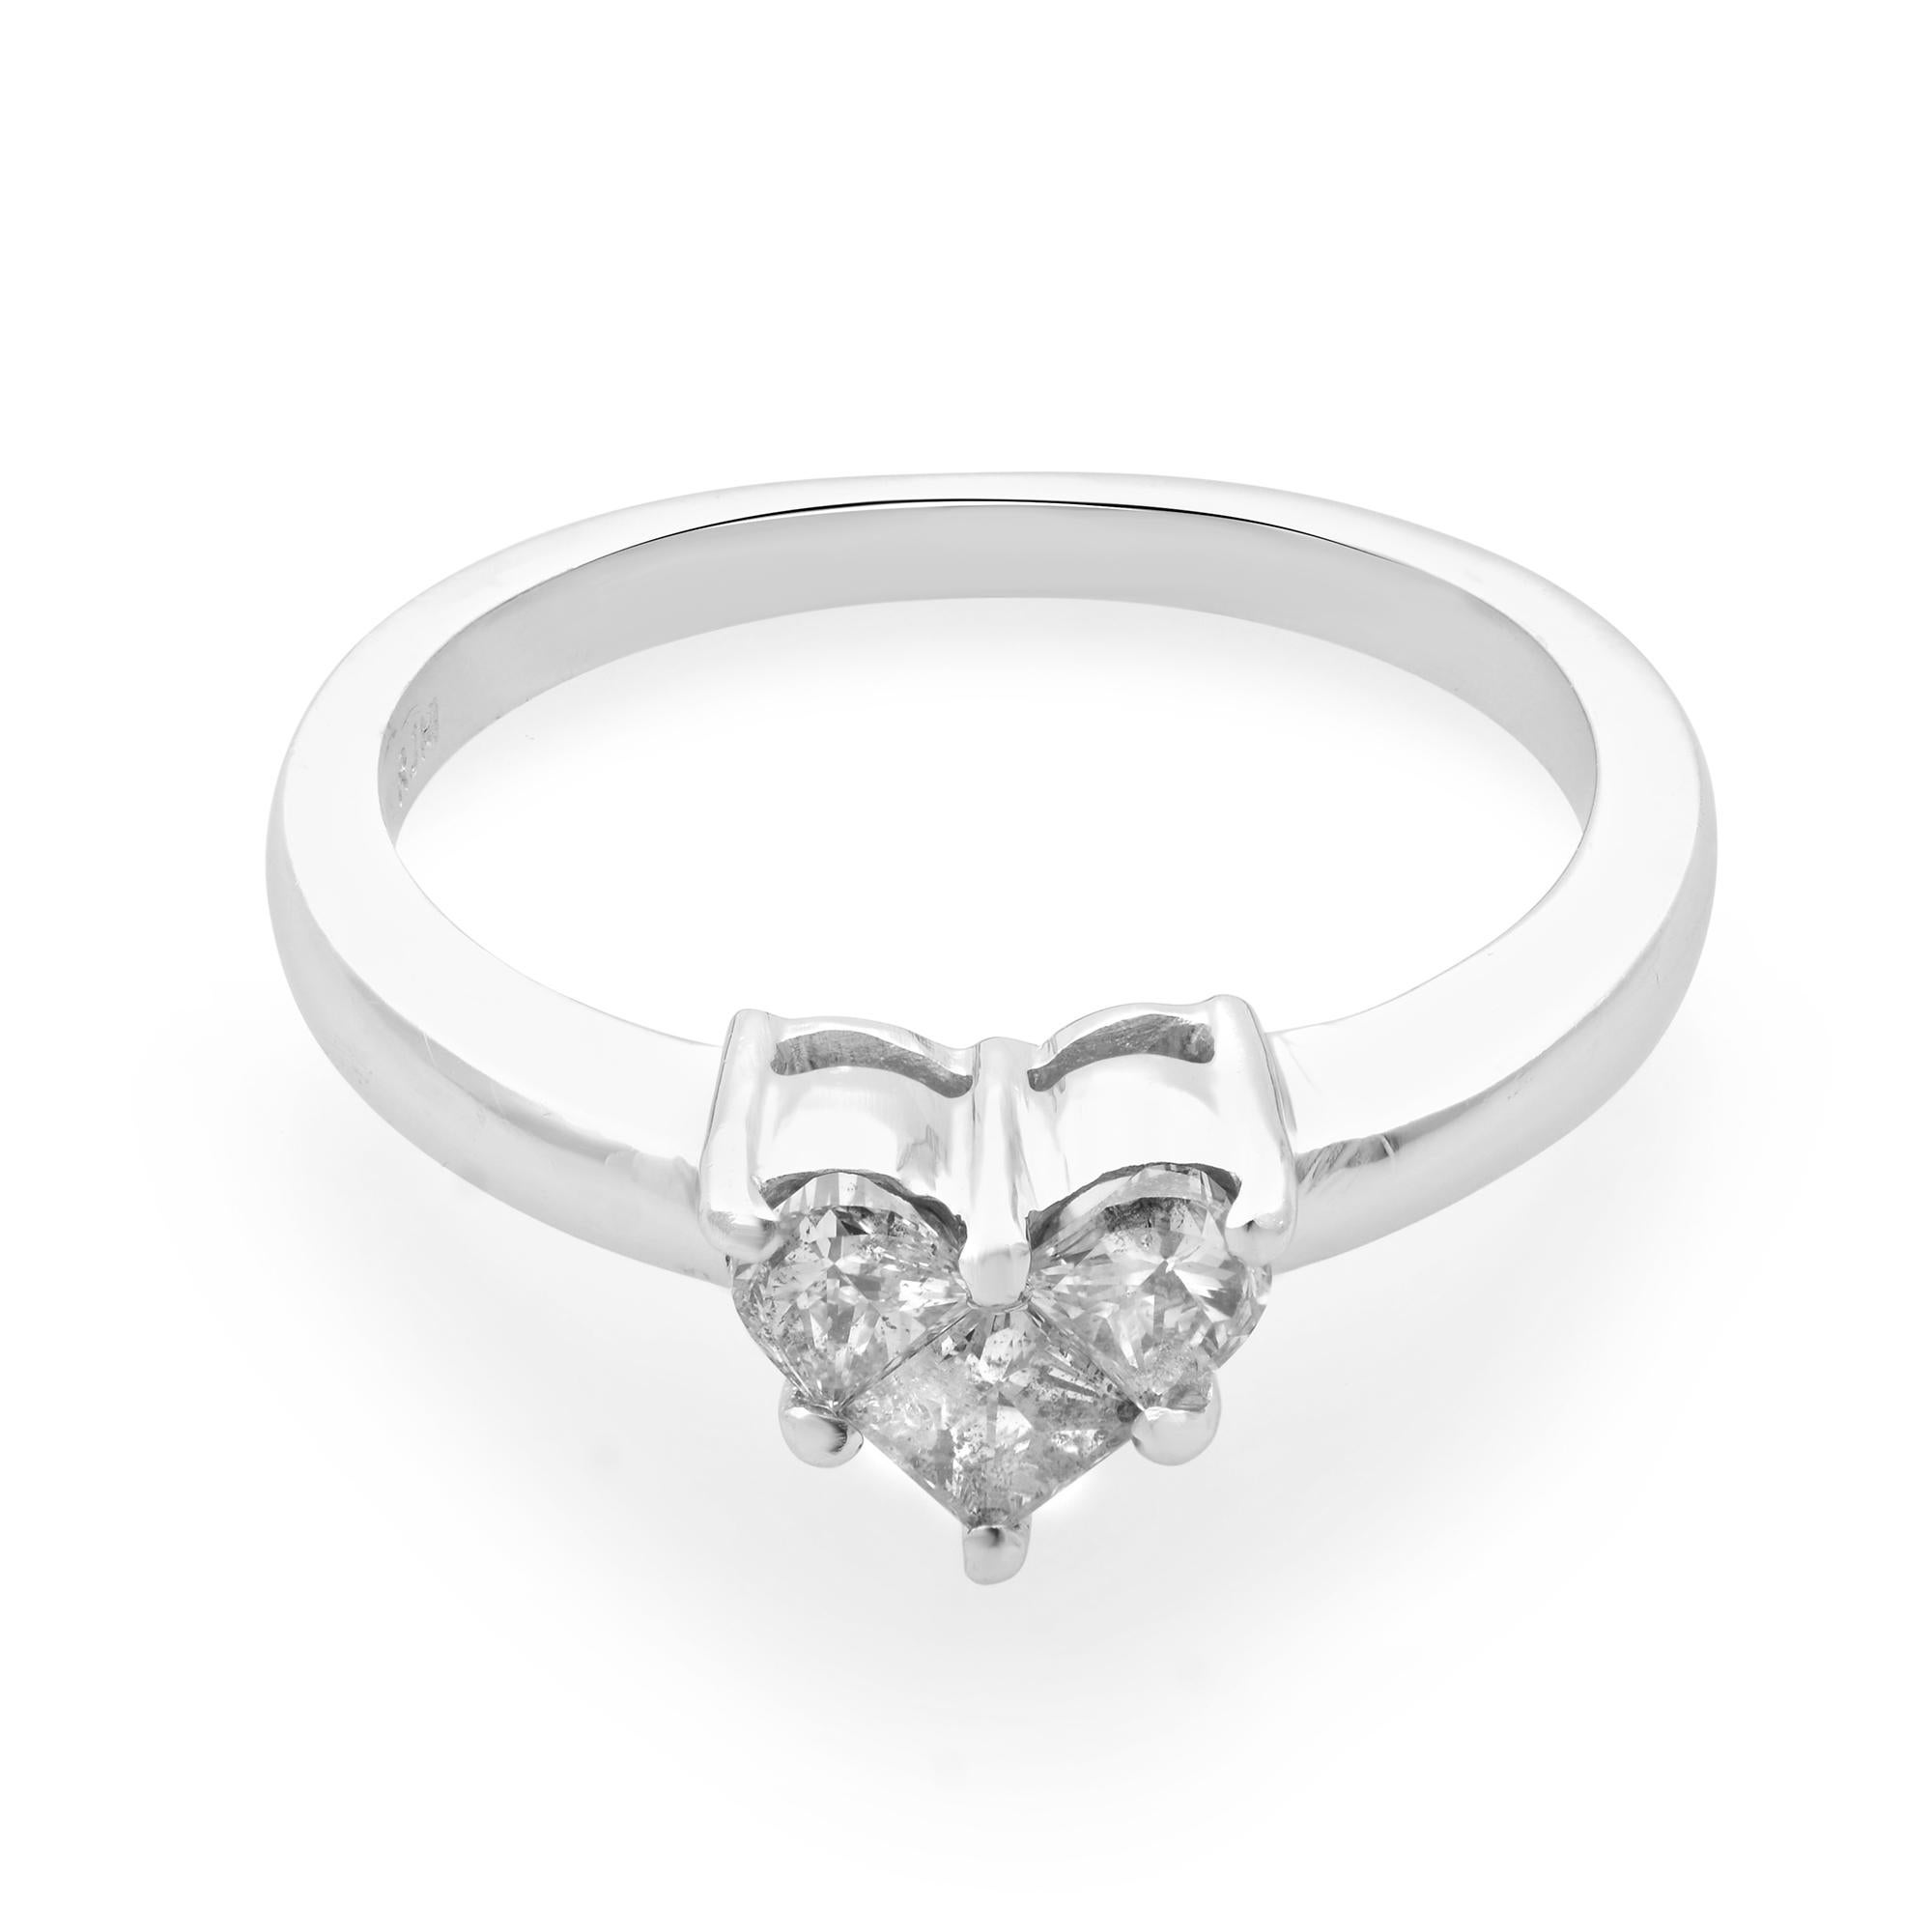 Round Cut Rachel Koen Heart Shaped Diamond Ladies Ring 14K White Gold 0.50Cttw For Sale